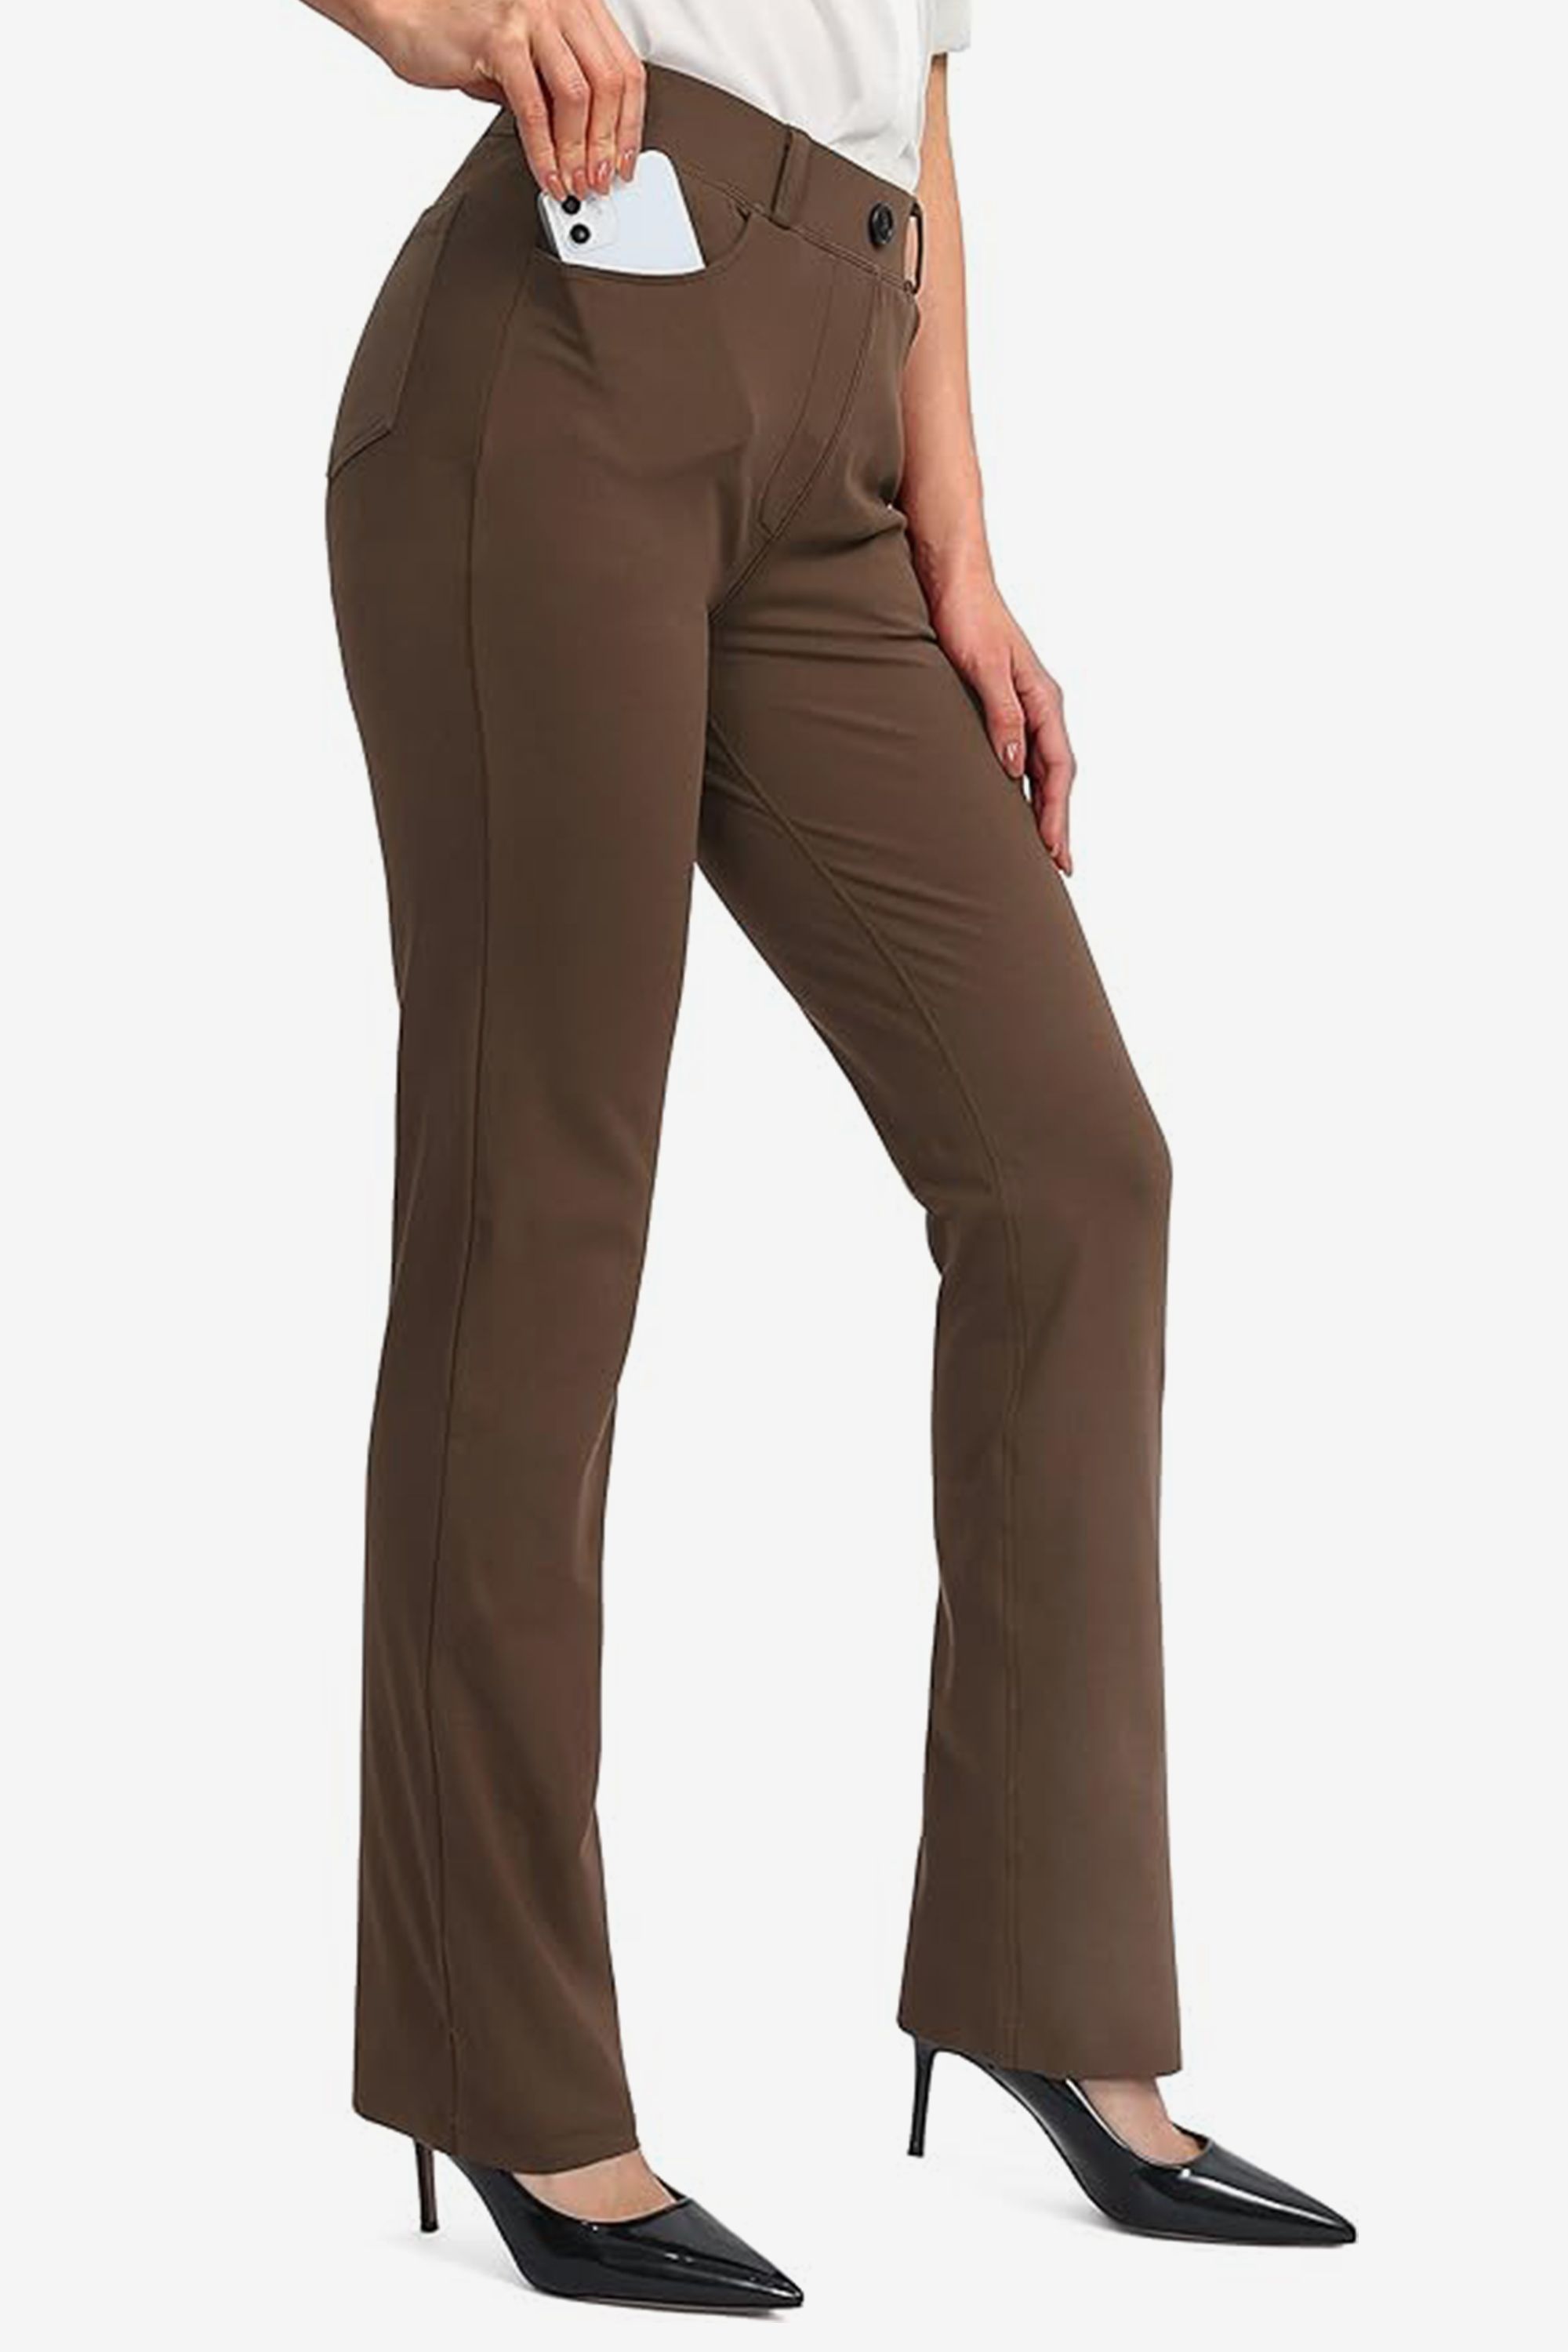 BROWN PANT | Work pants women, Straight pants, Pants for women